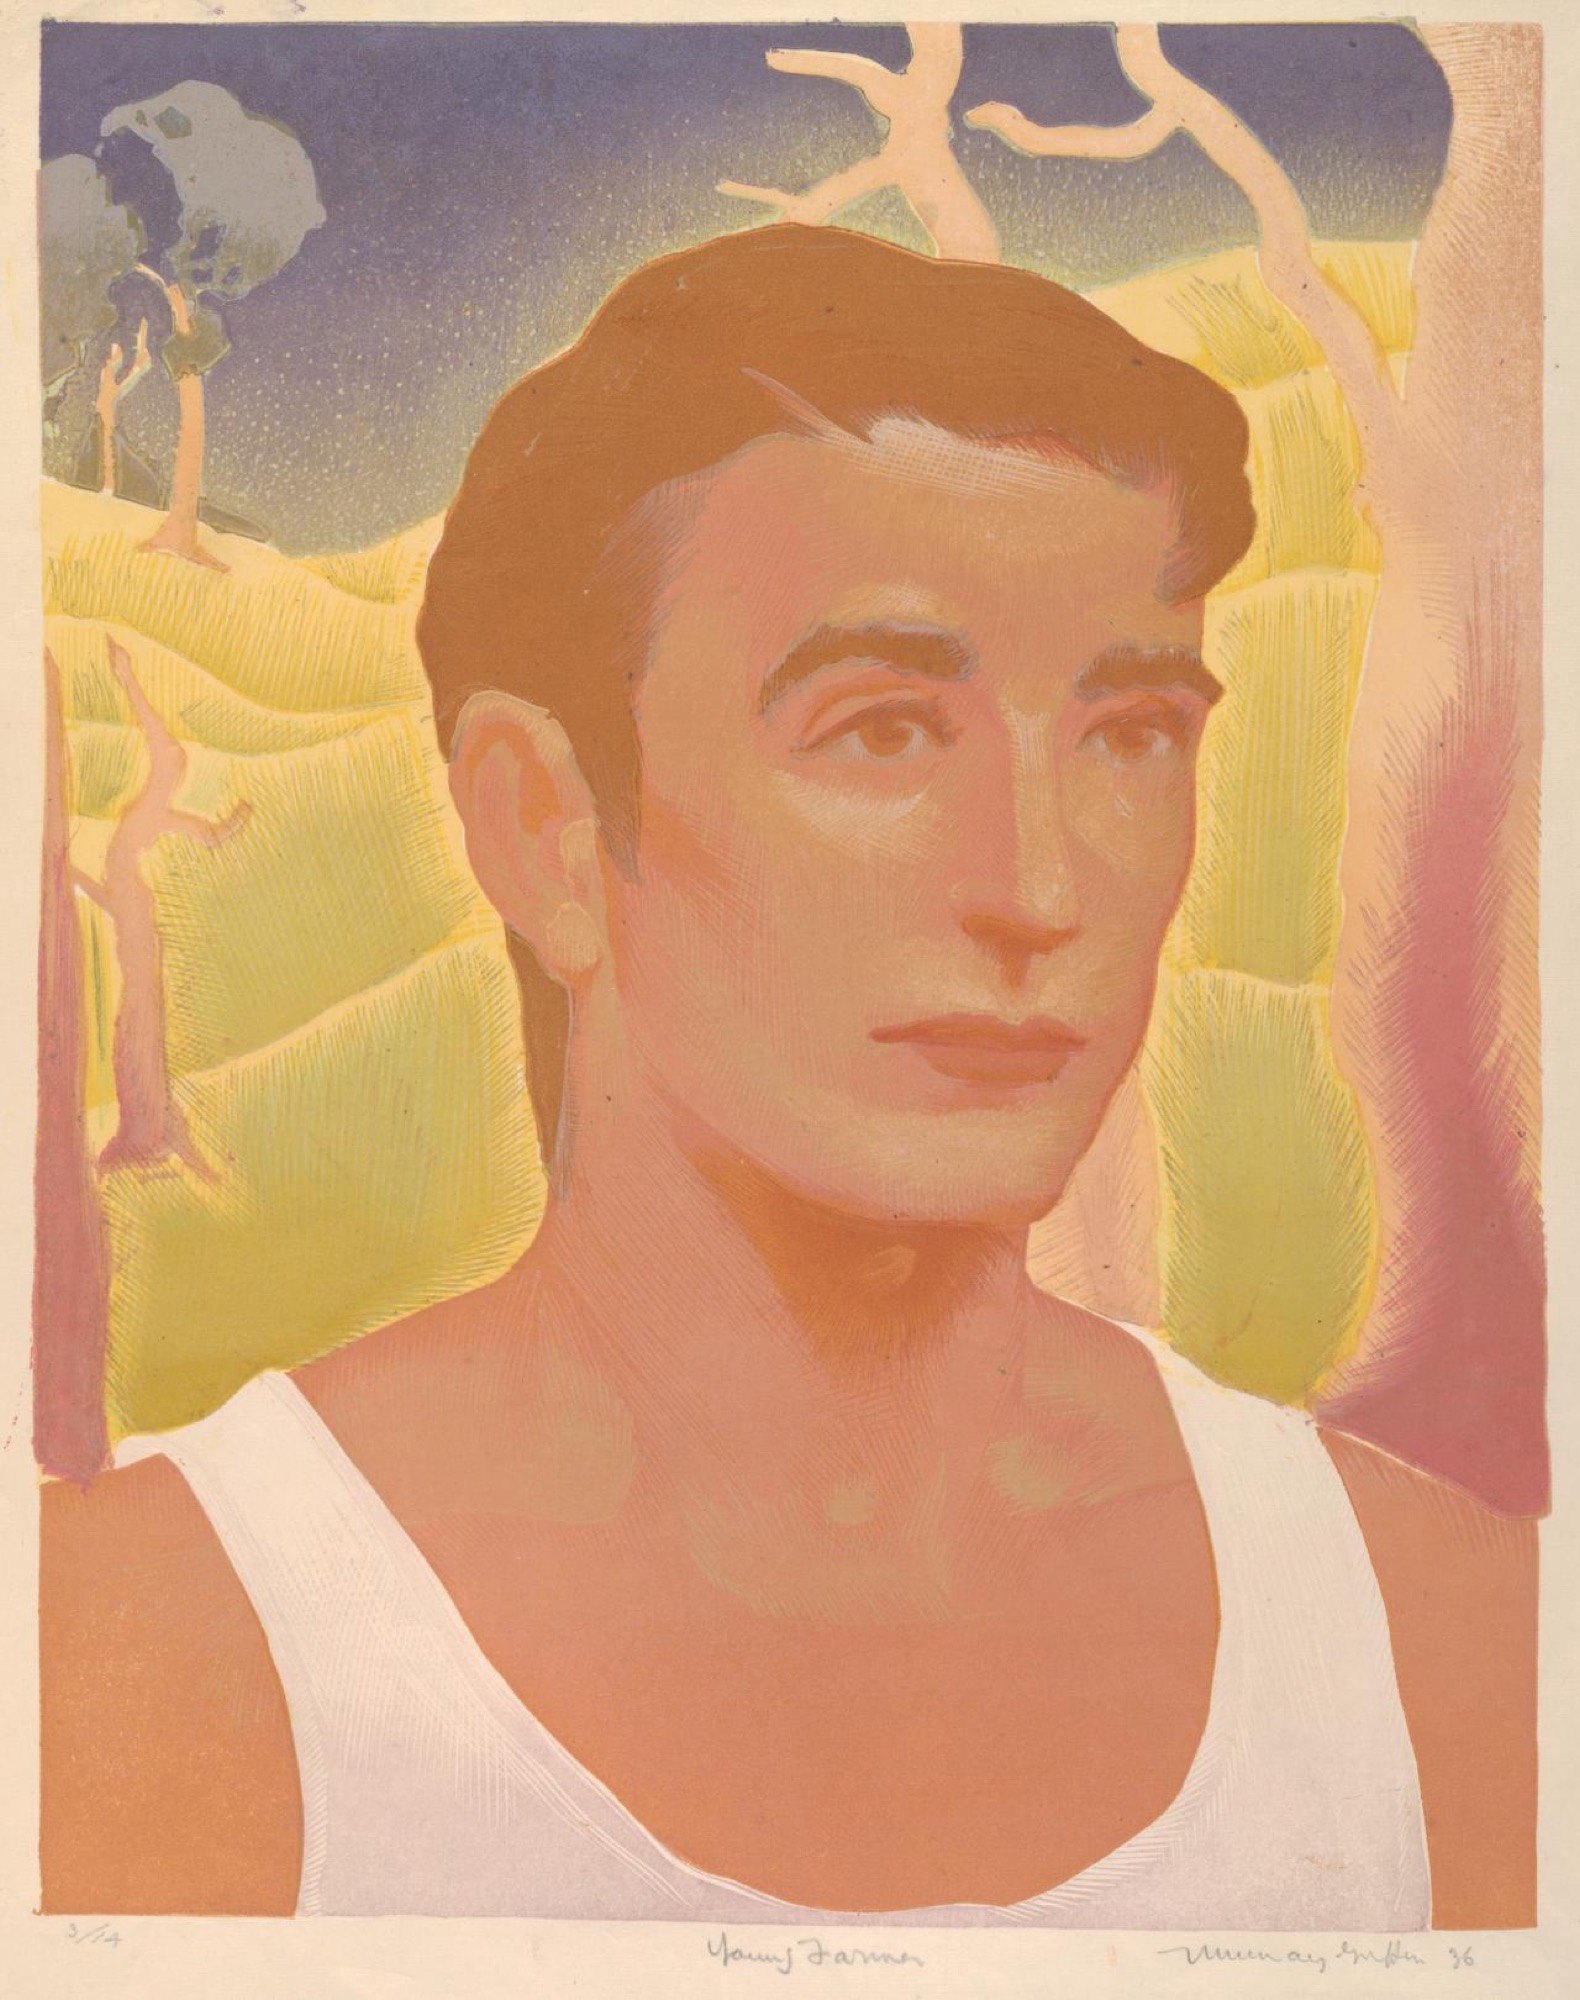 Murray Griffin, <em>Young farmer</em>, 1936, linocut, 35.3 × 28.2 cm (image) 46.7 × 32.3 cm (sheet). Melbourne: National Gallery of Victoria.